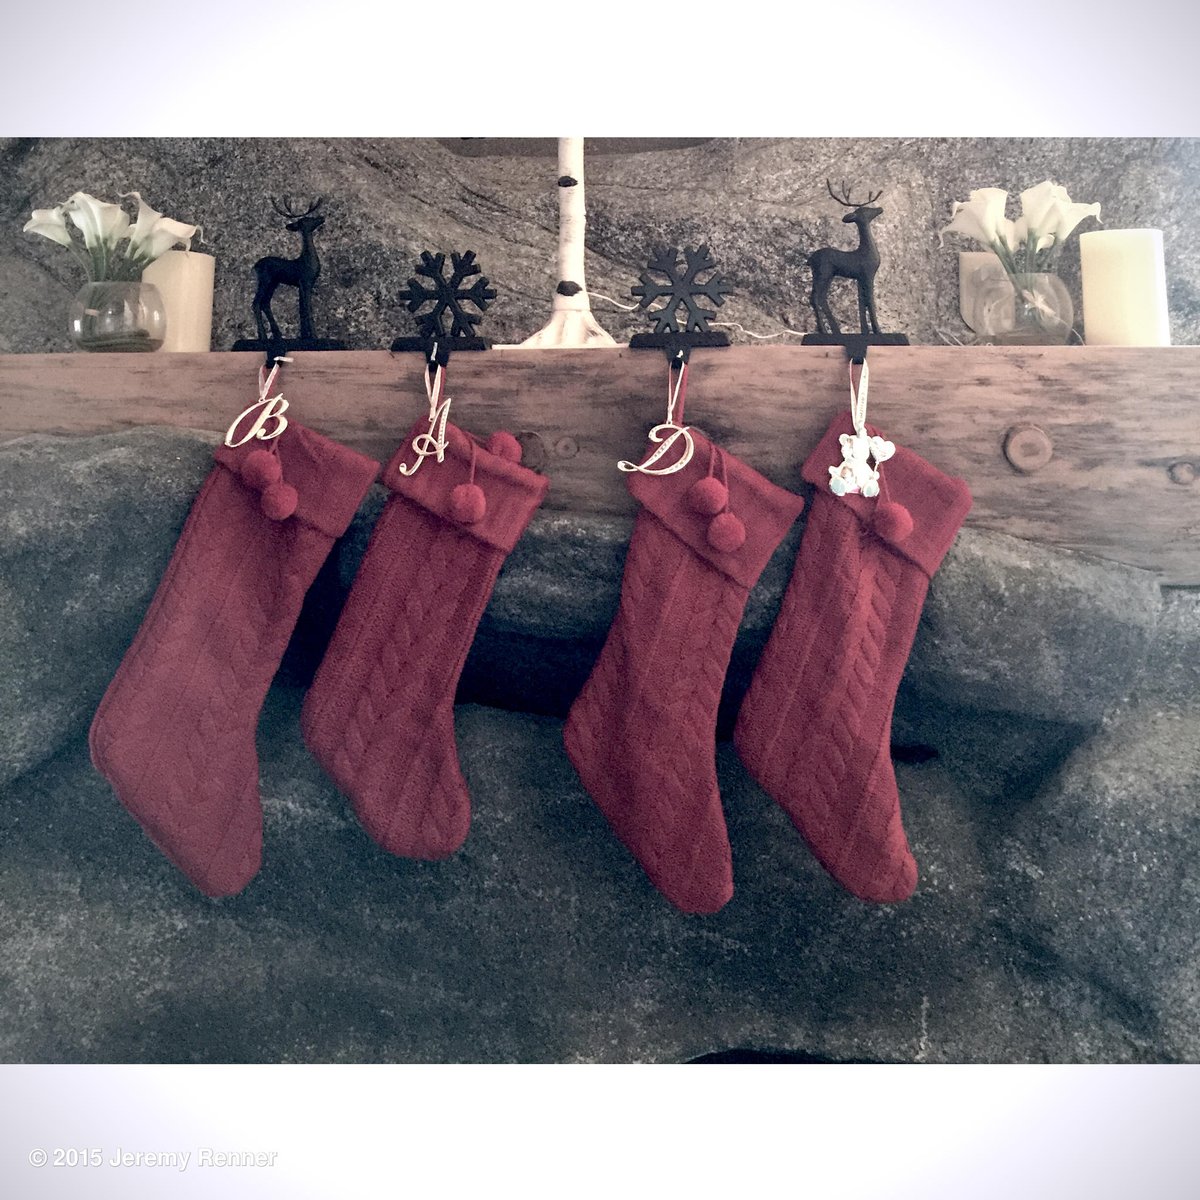 For some the little ones...  #badsanta #stockings #moutain #mantle https://t.co/4jl79Spzlq